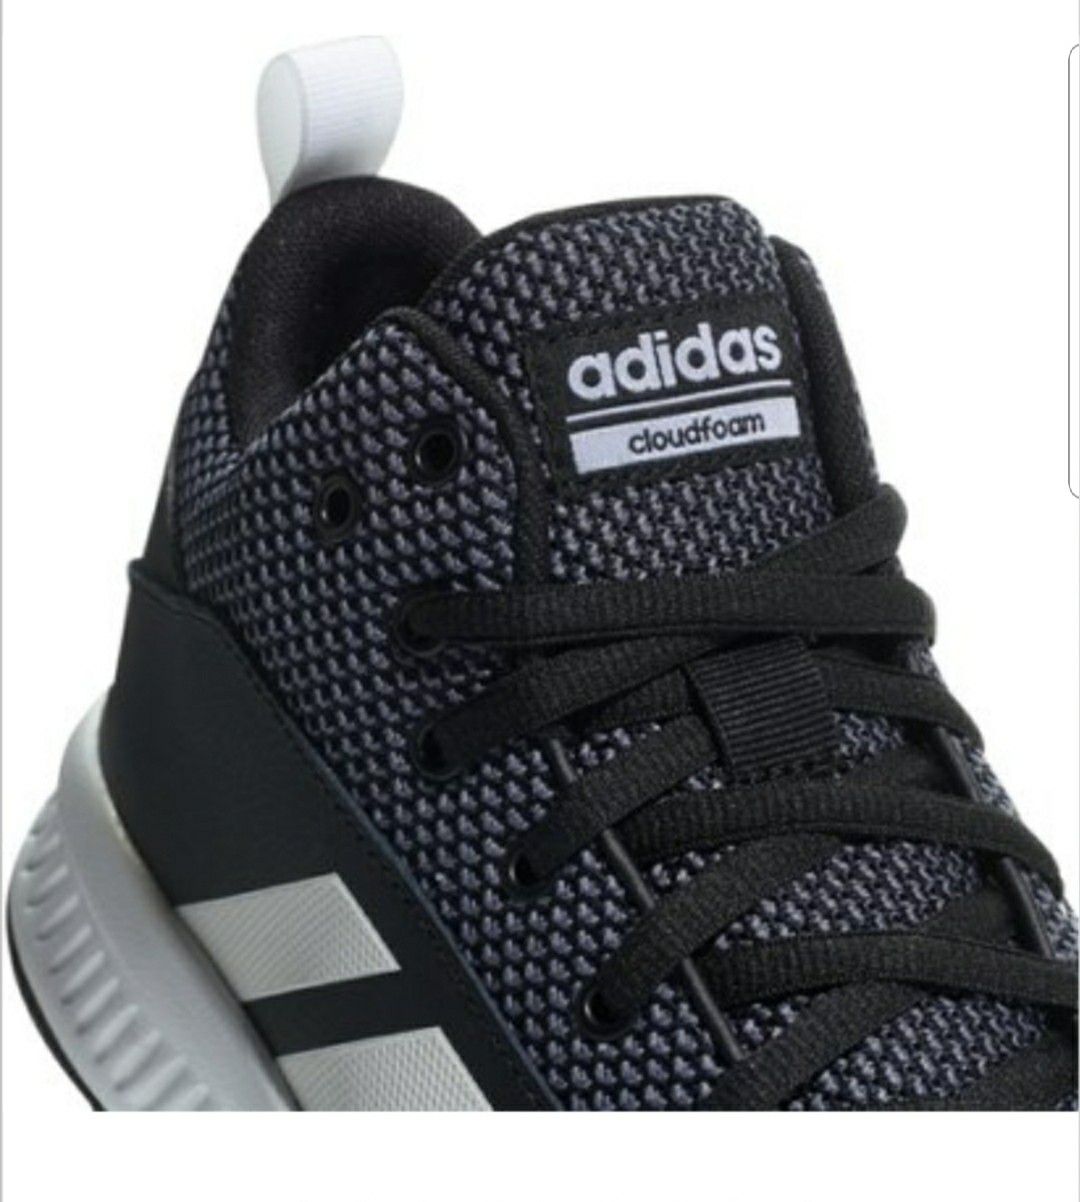 adidas Men's Cloudfoam Ilation 2.0 Basketball Shoes Size 8